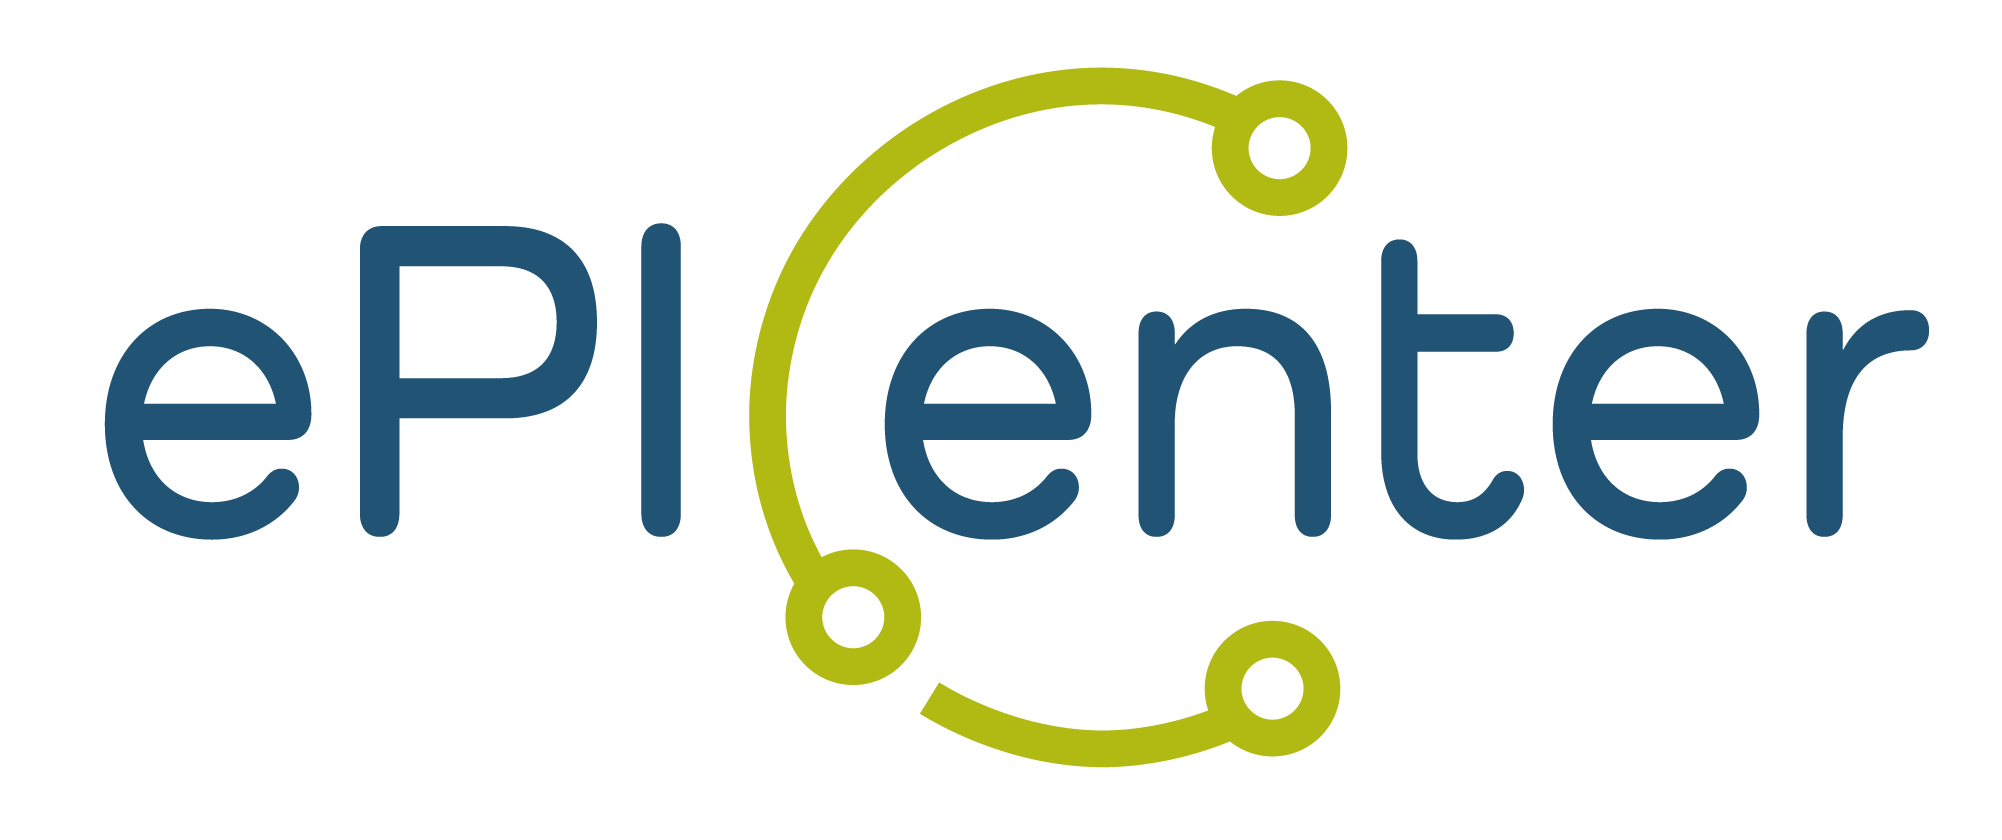 ePIcenter Logo